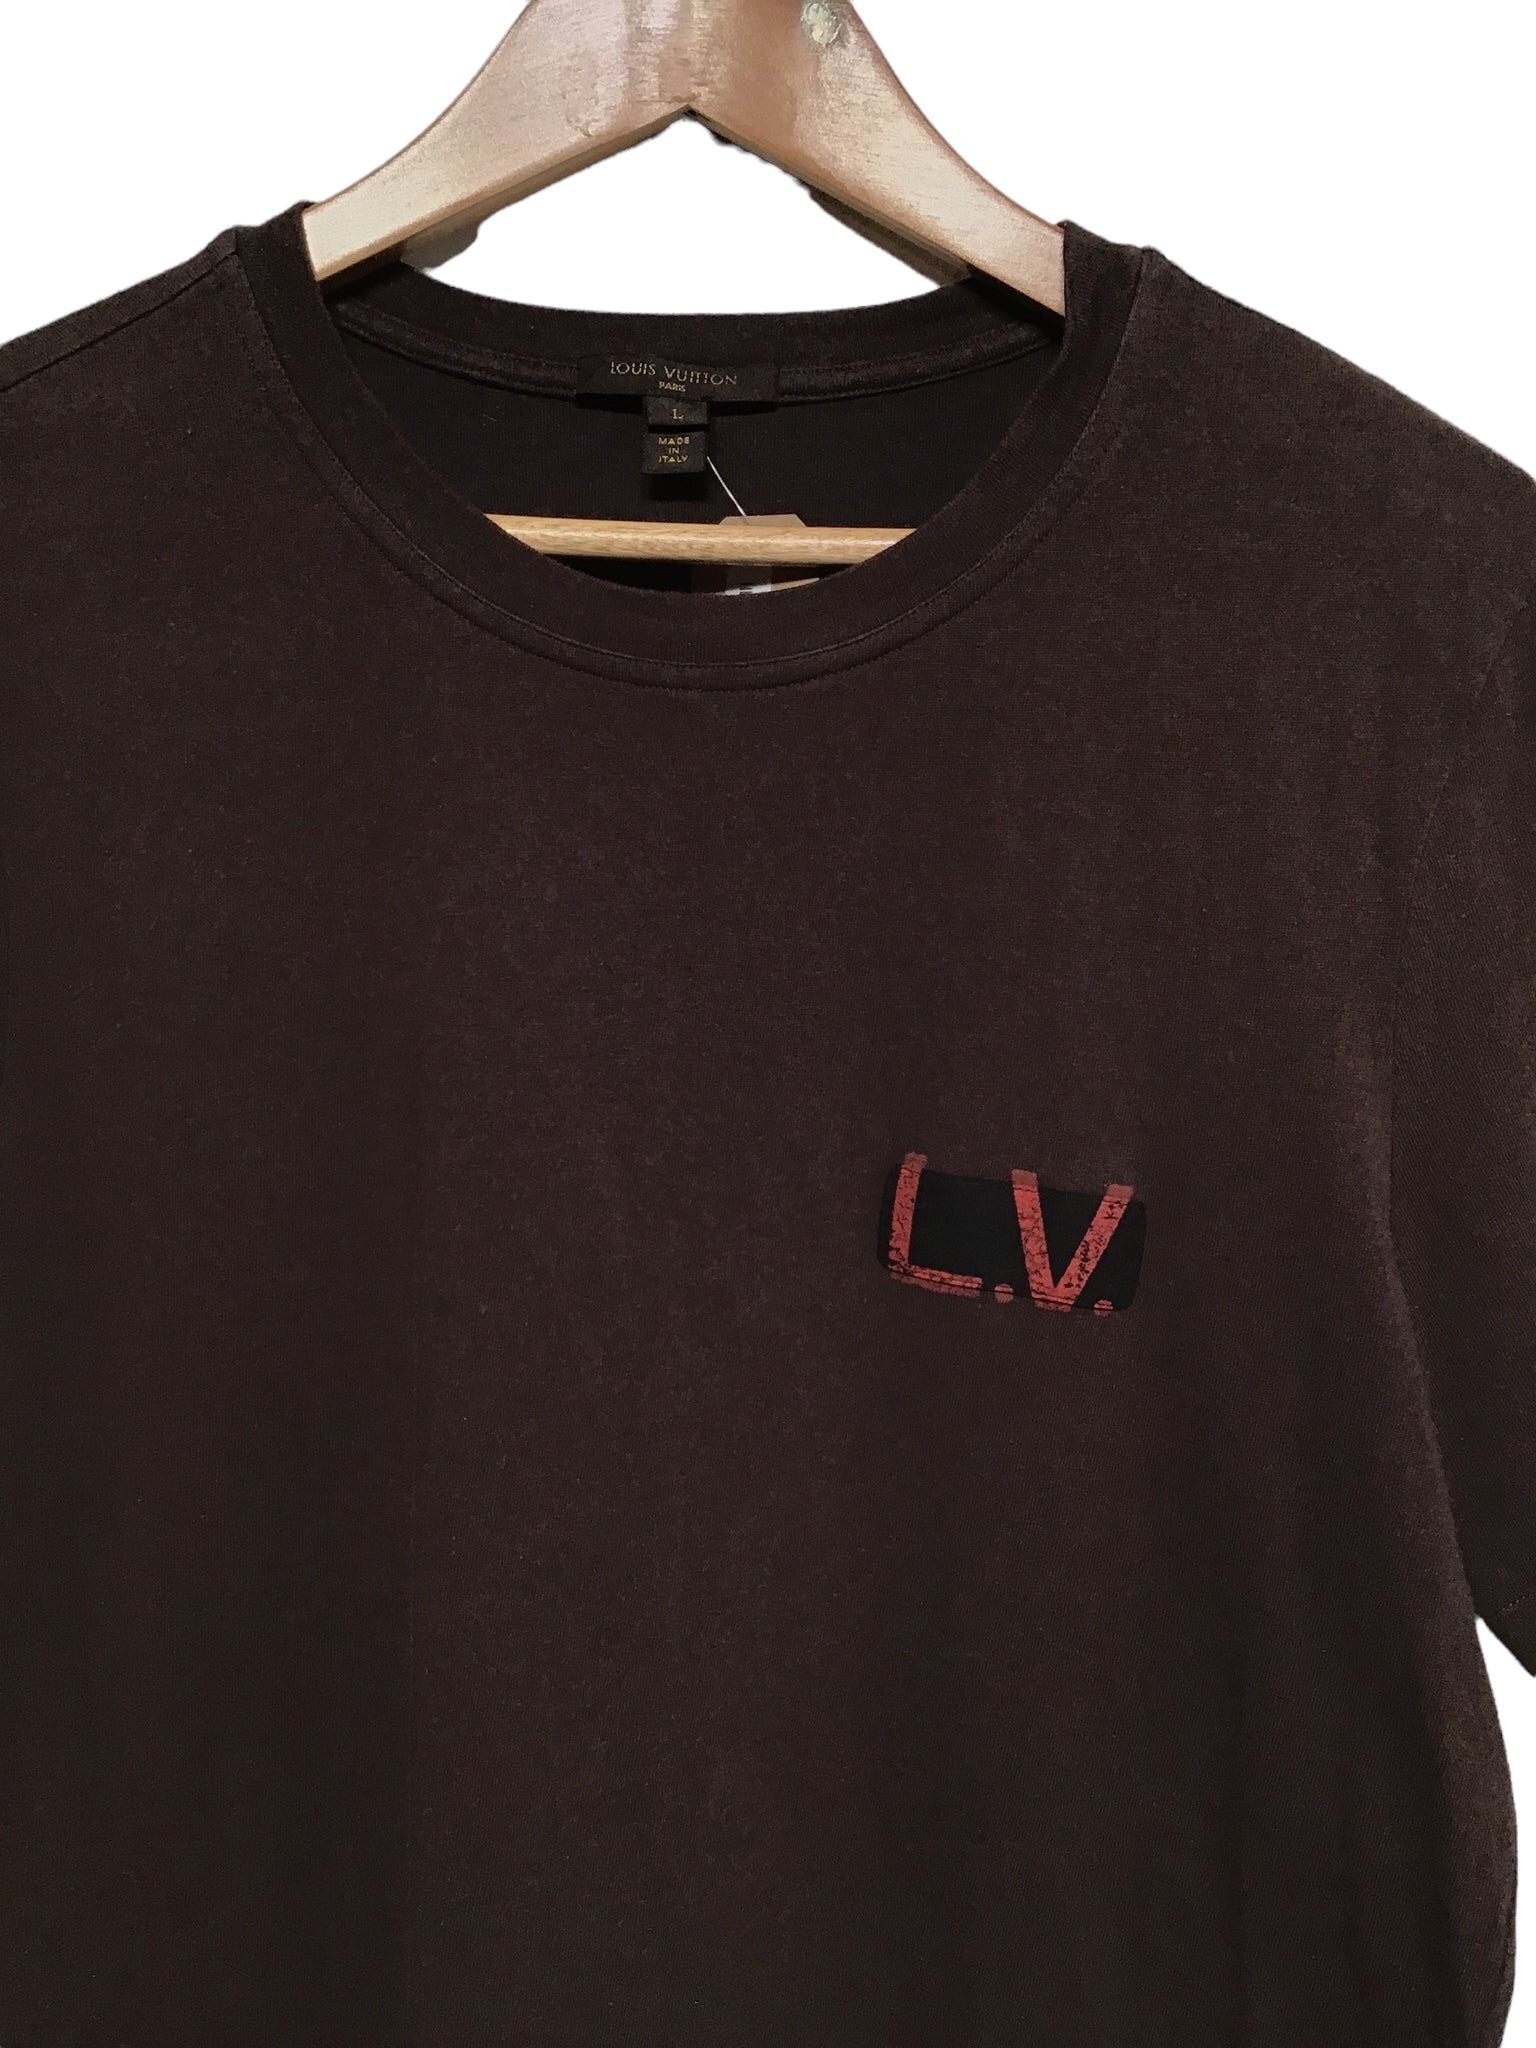 Louis Vuitton T-shirt in Brown LV Louis Vuitton Crewneck Shirt -  Israel